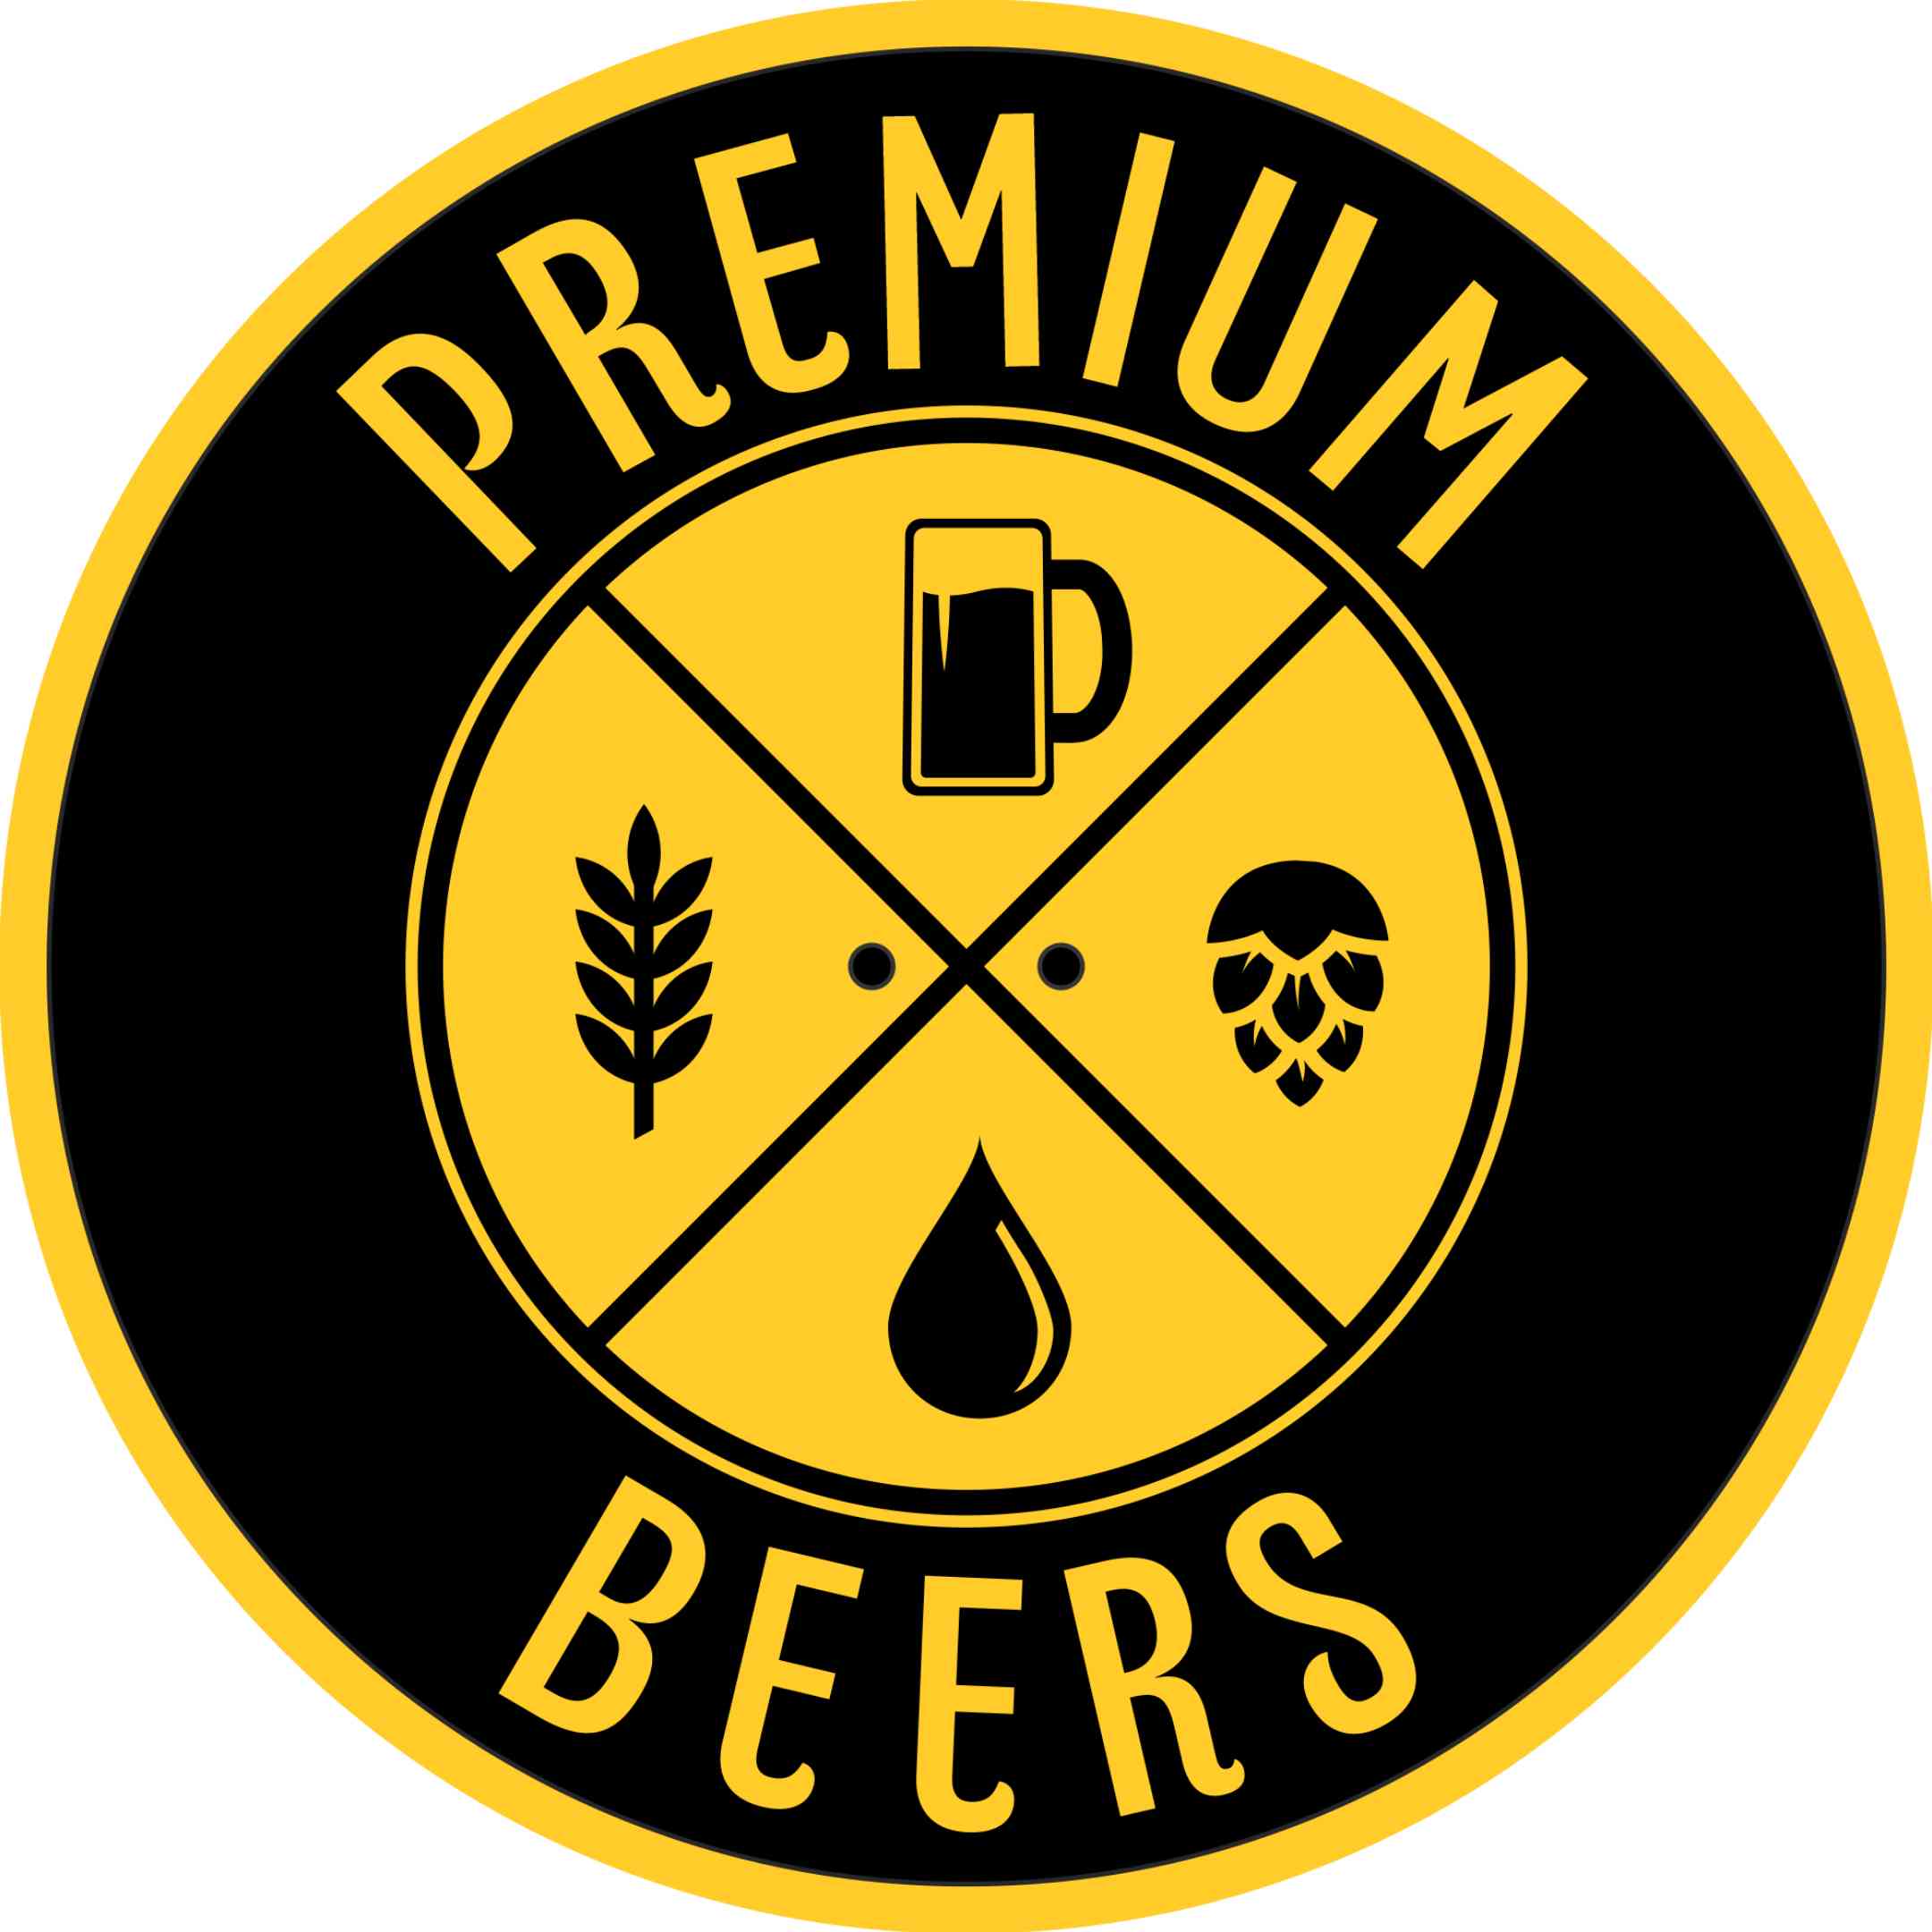 Premium Beers